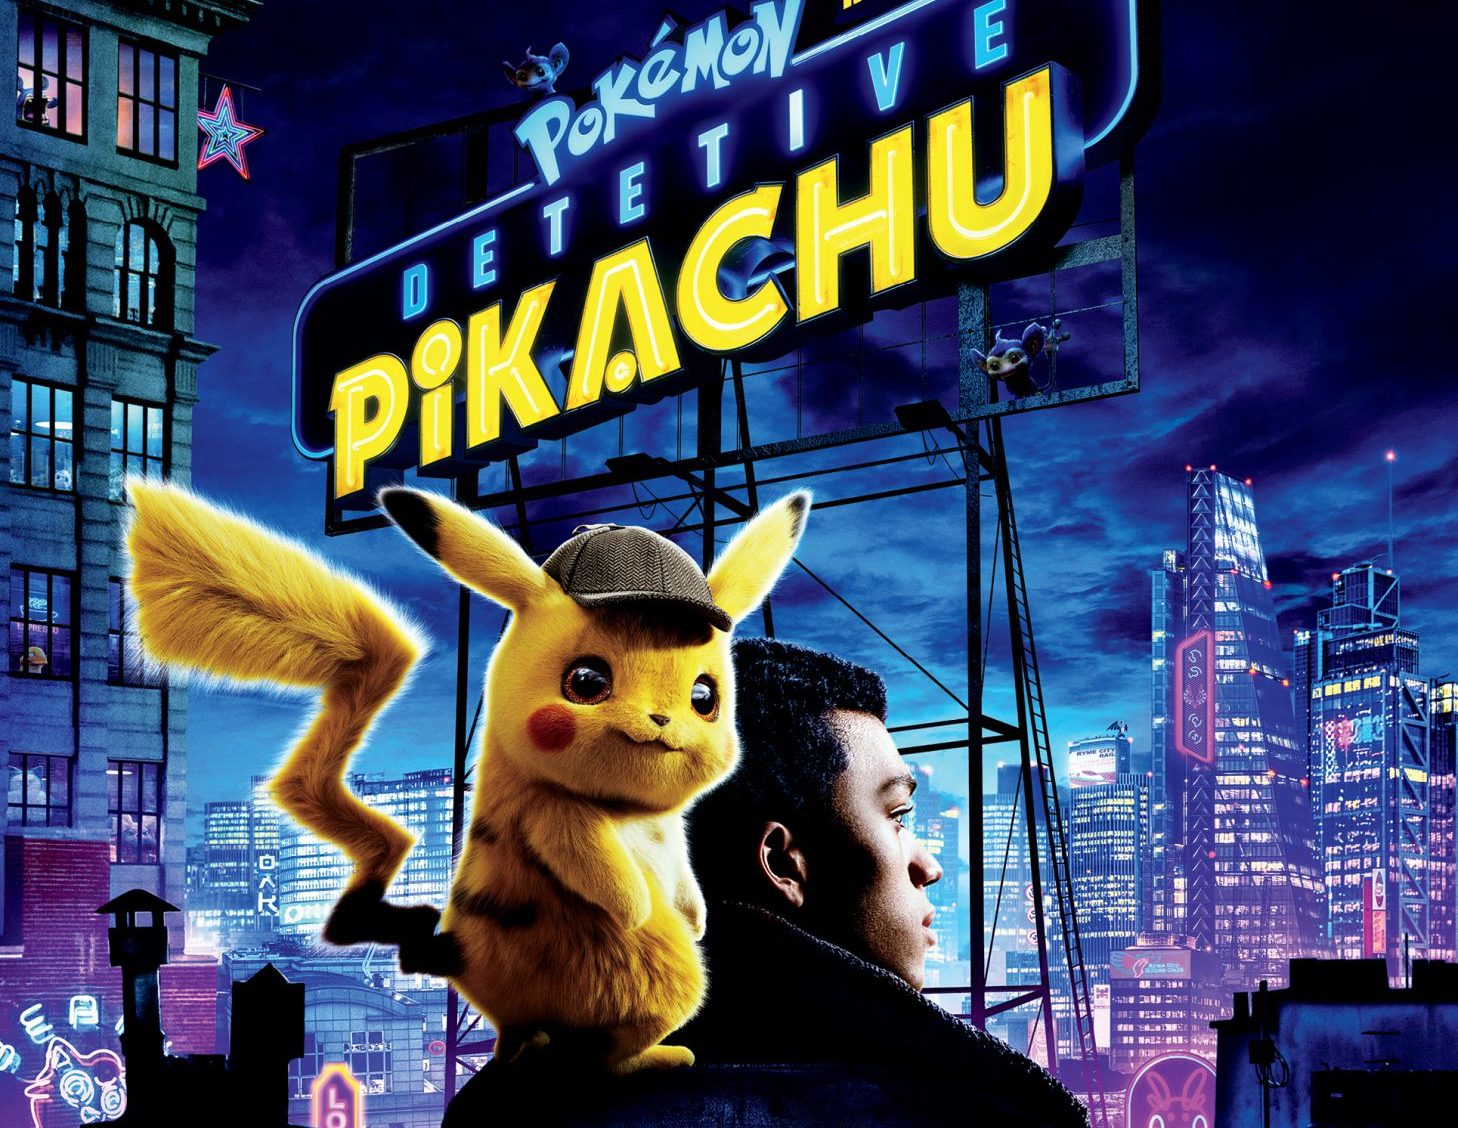 Detetive Pikachu - Trailer dublado online